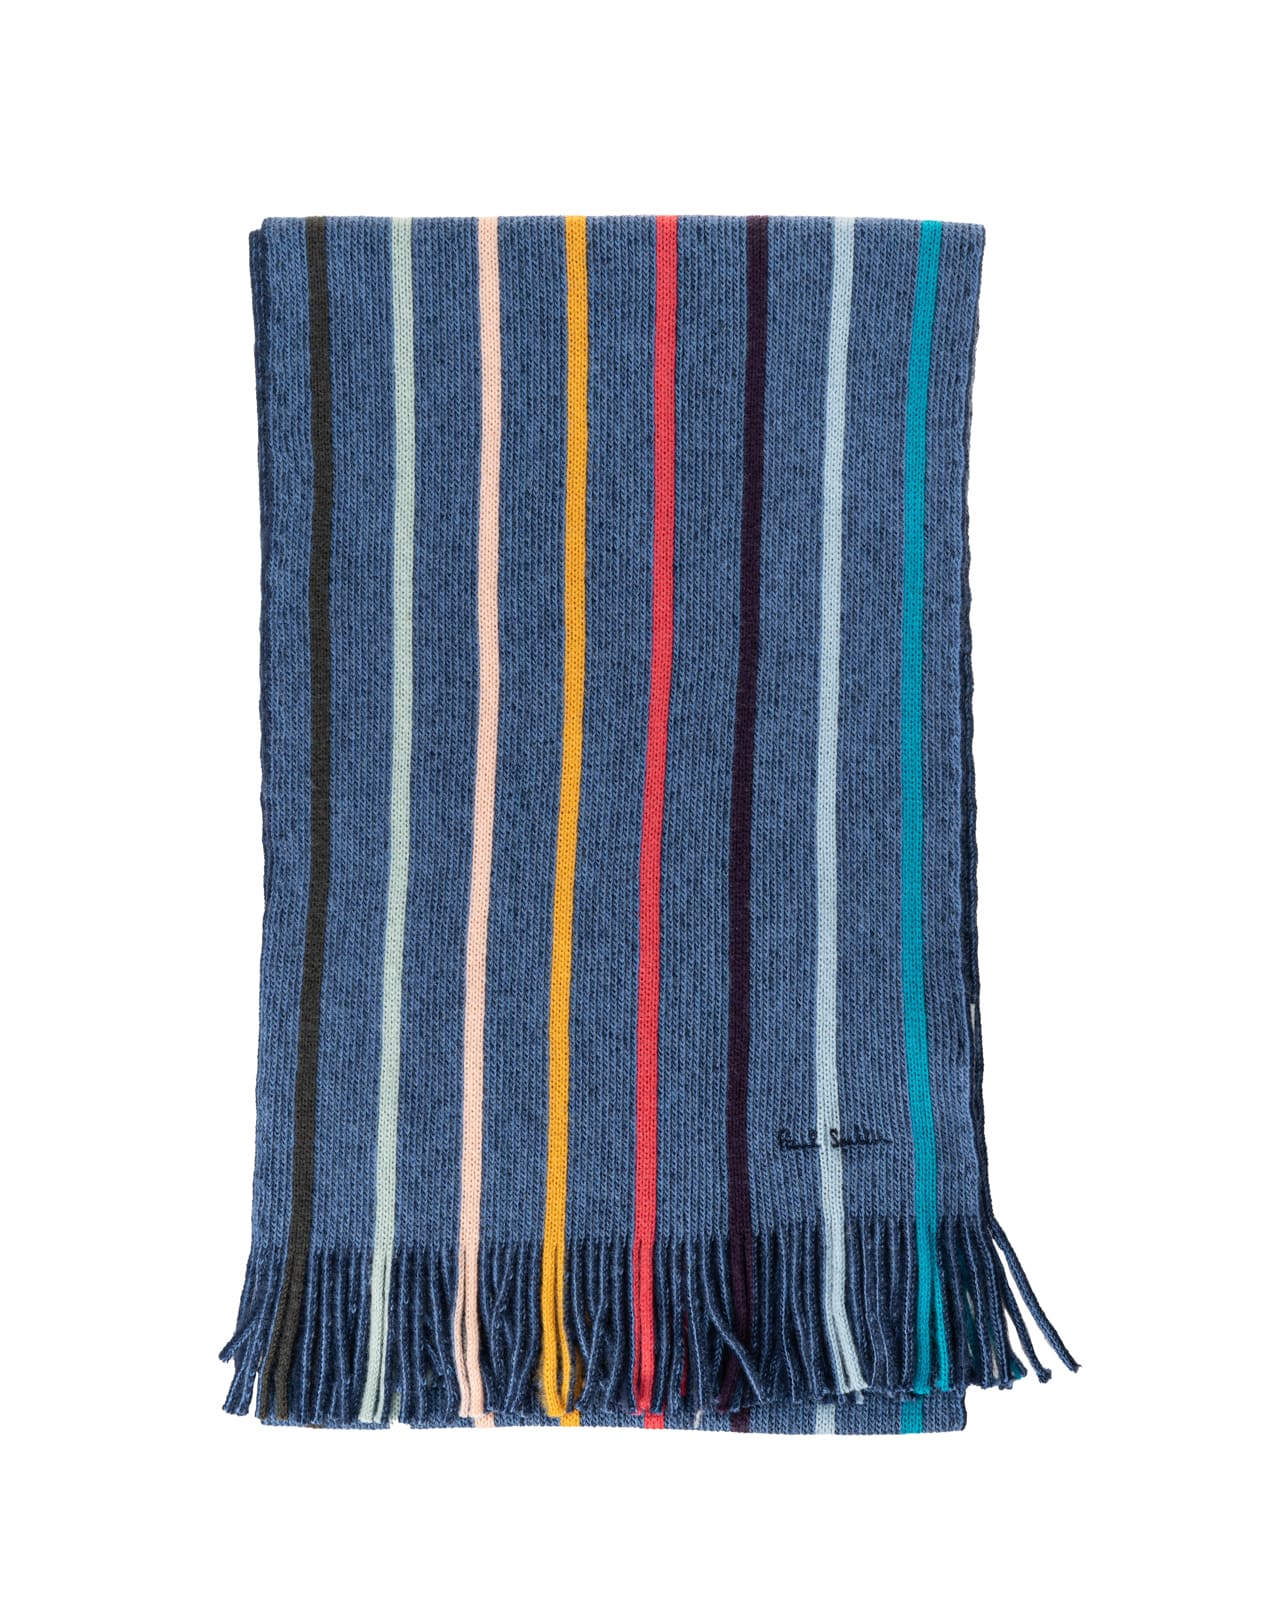 Paul Smith wool scarf